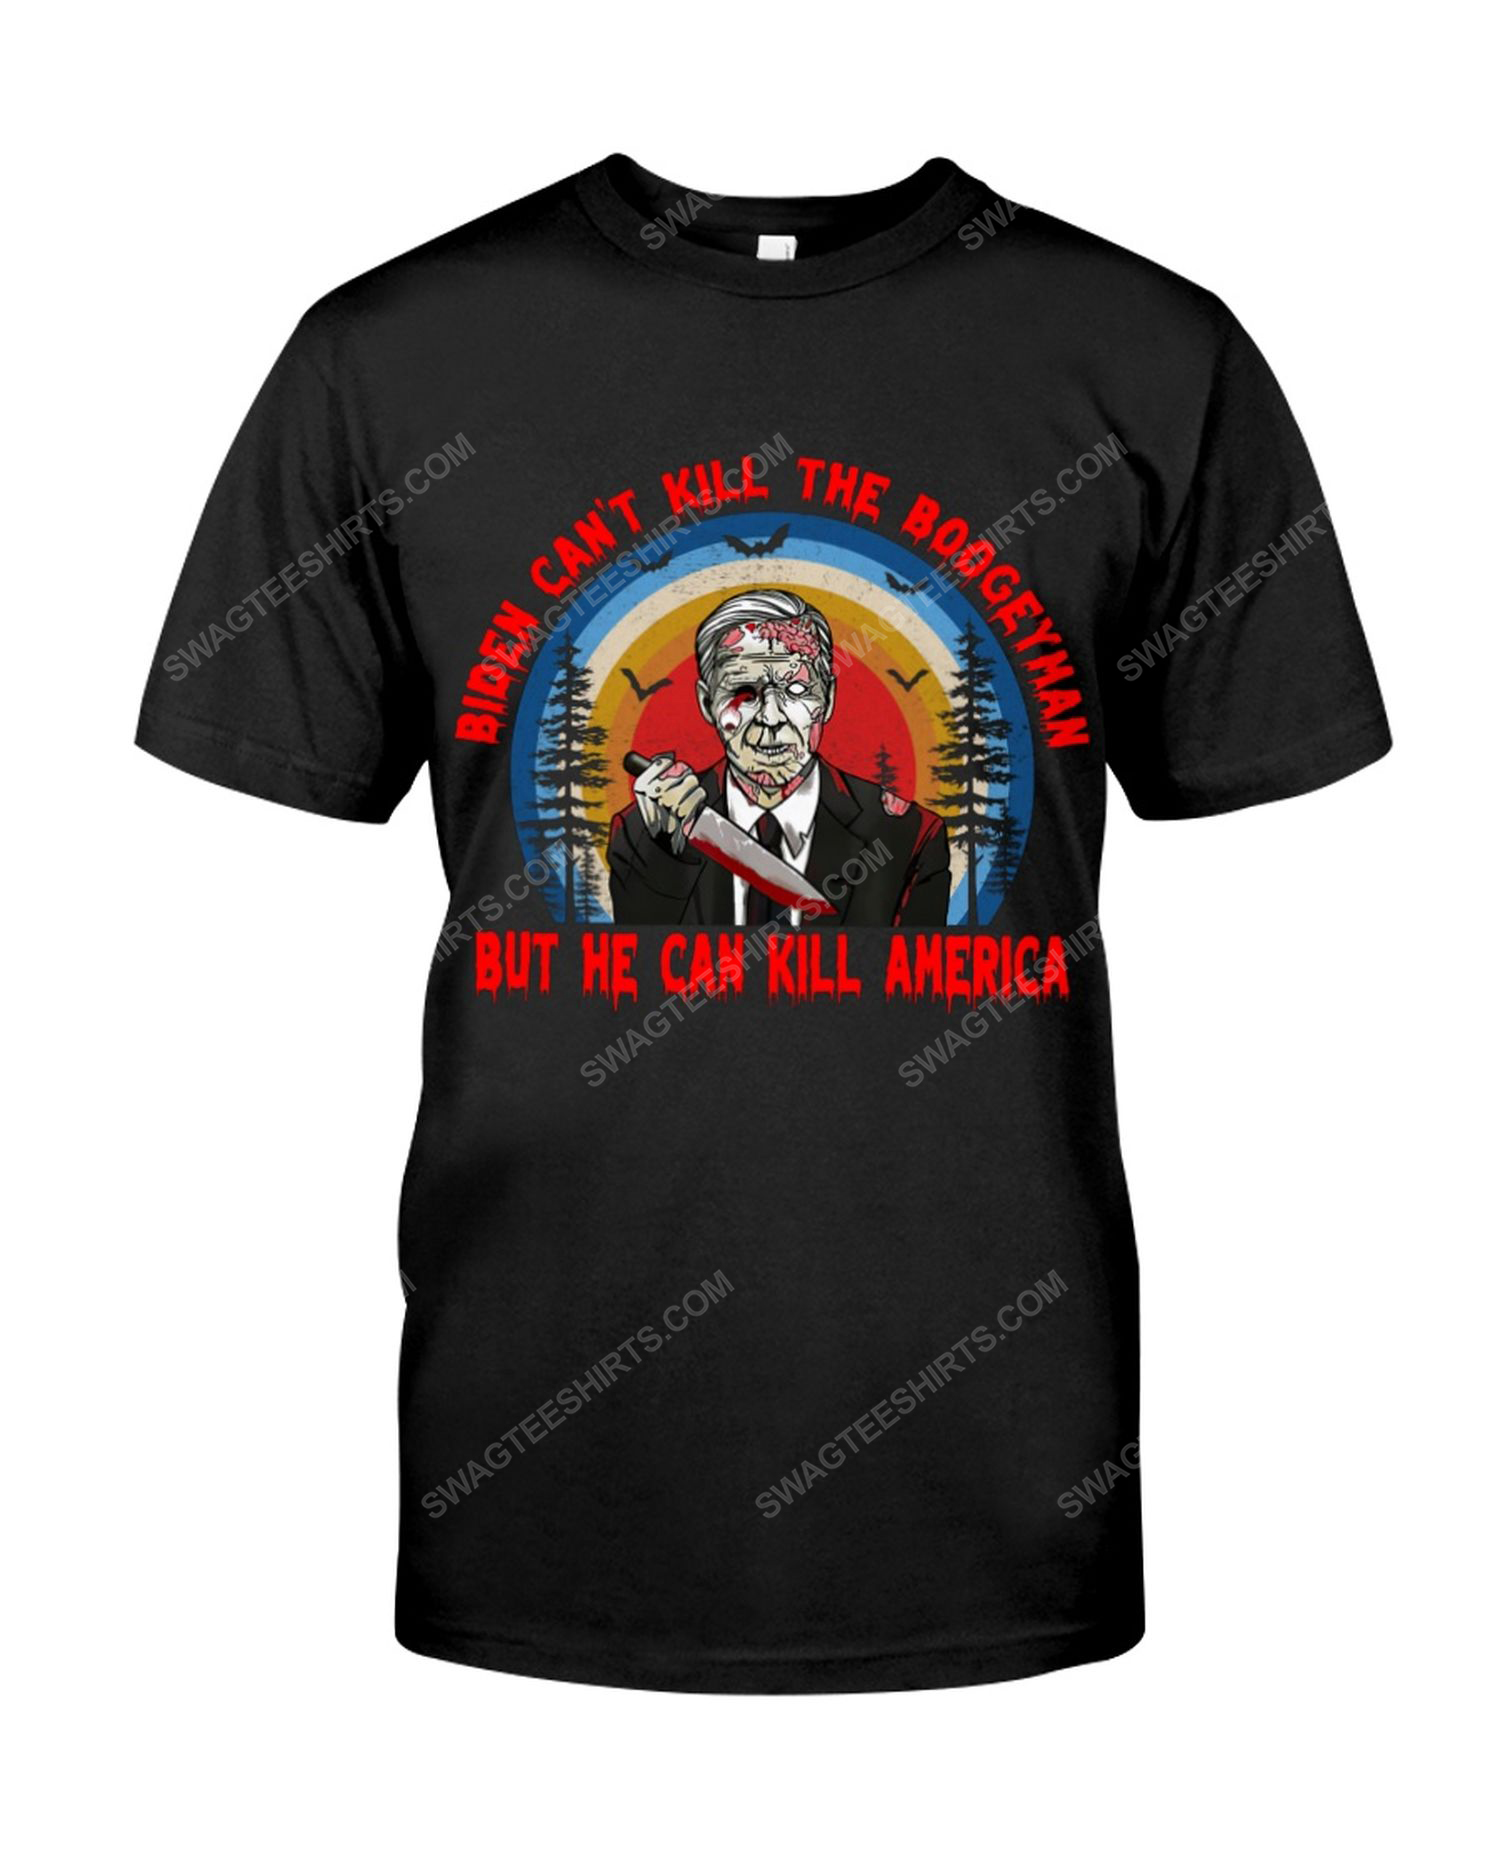 Biden can't kill the boogeyman but he can kill america political tshirt